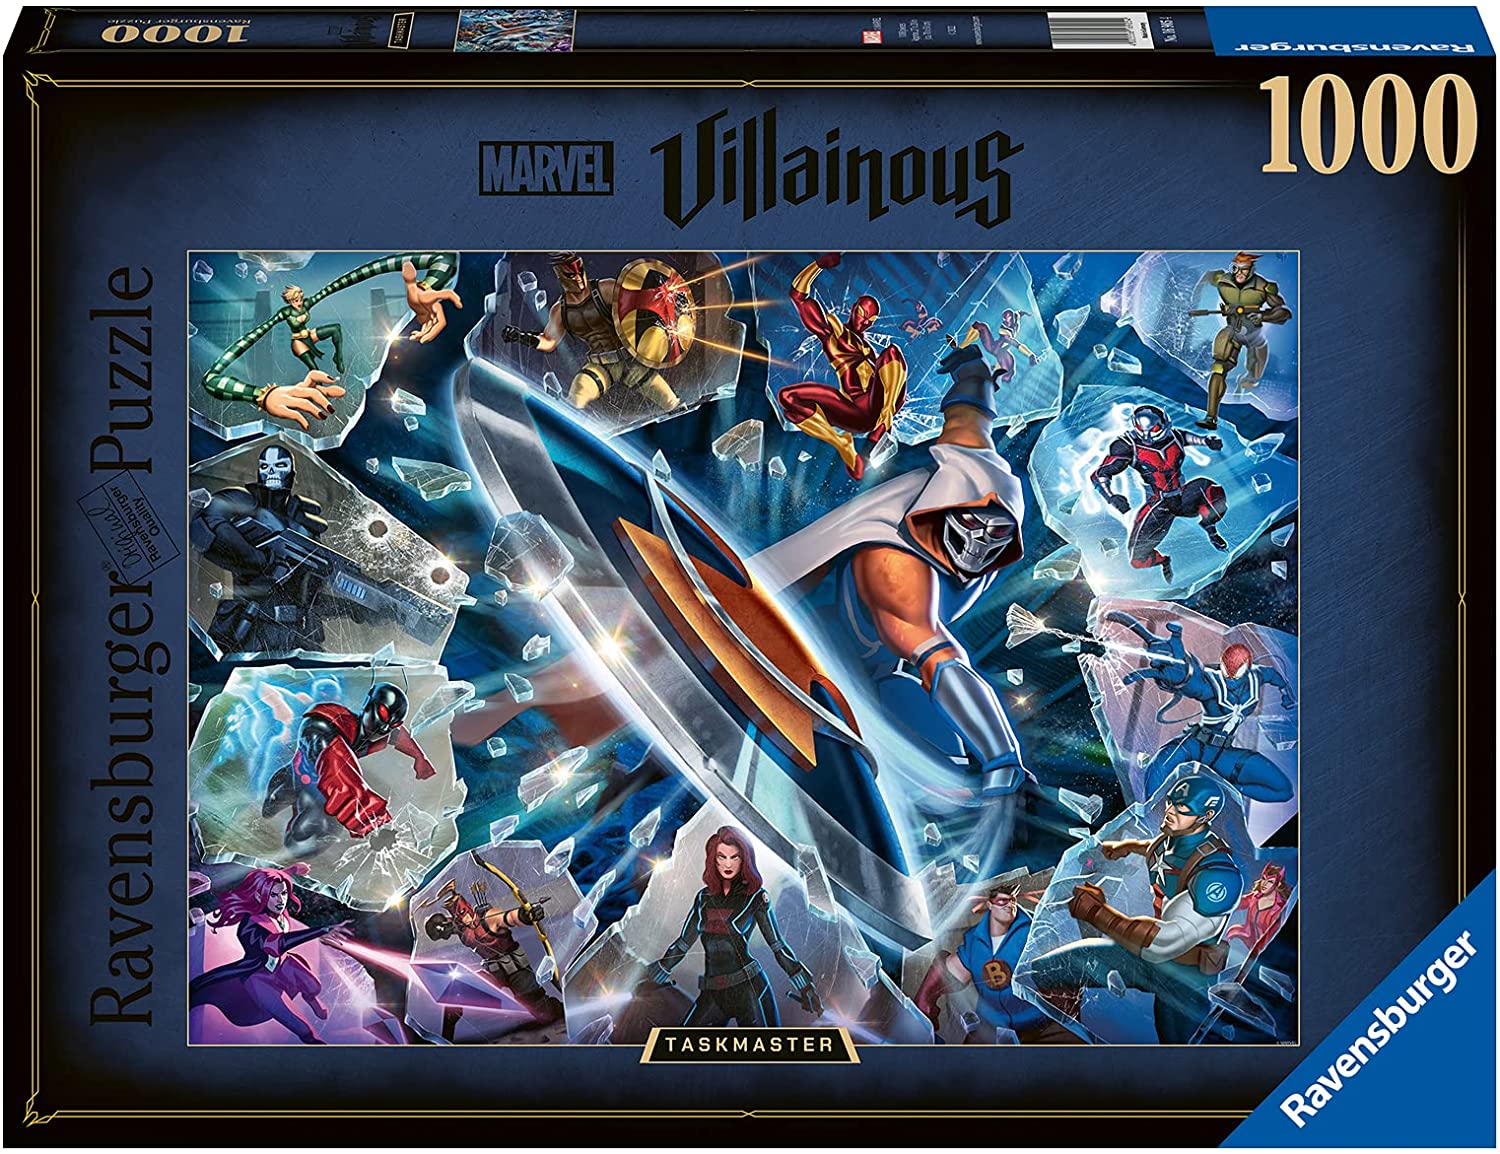 Disney Villainous - Taskmaster (1000 pc puzzle)